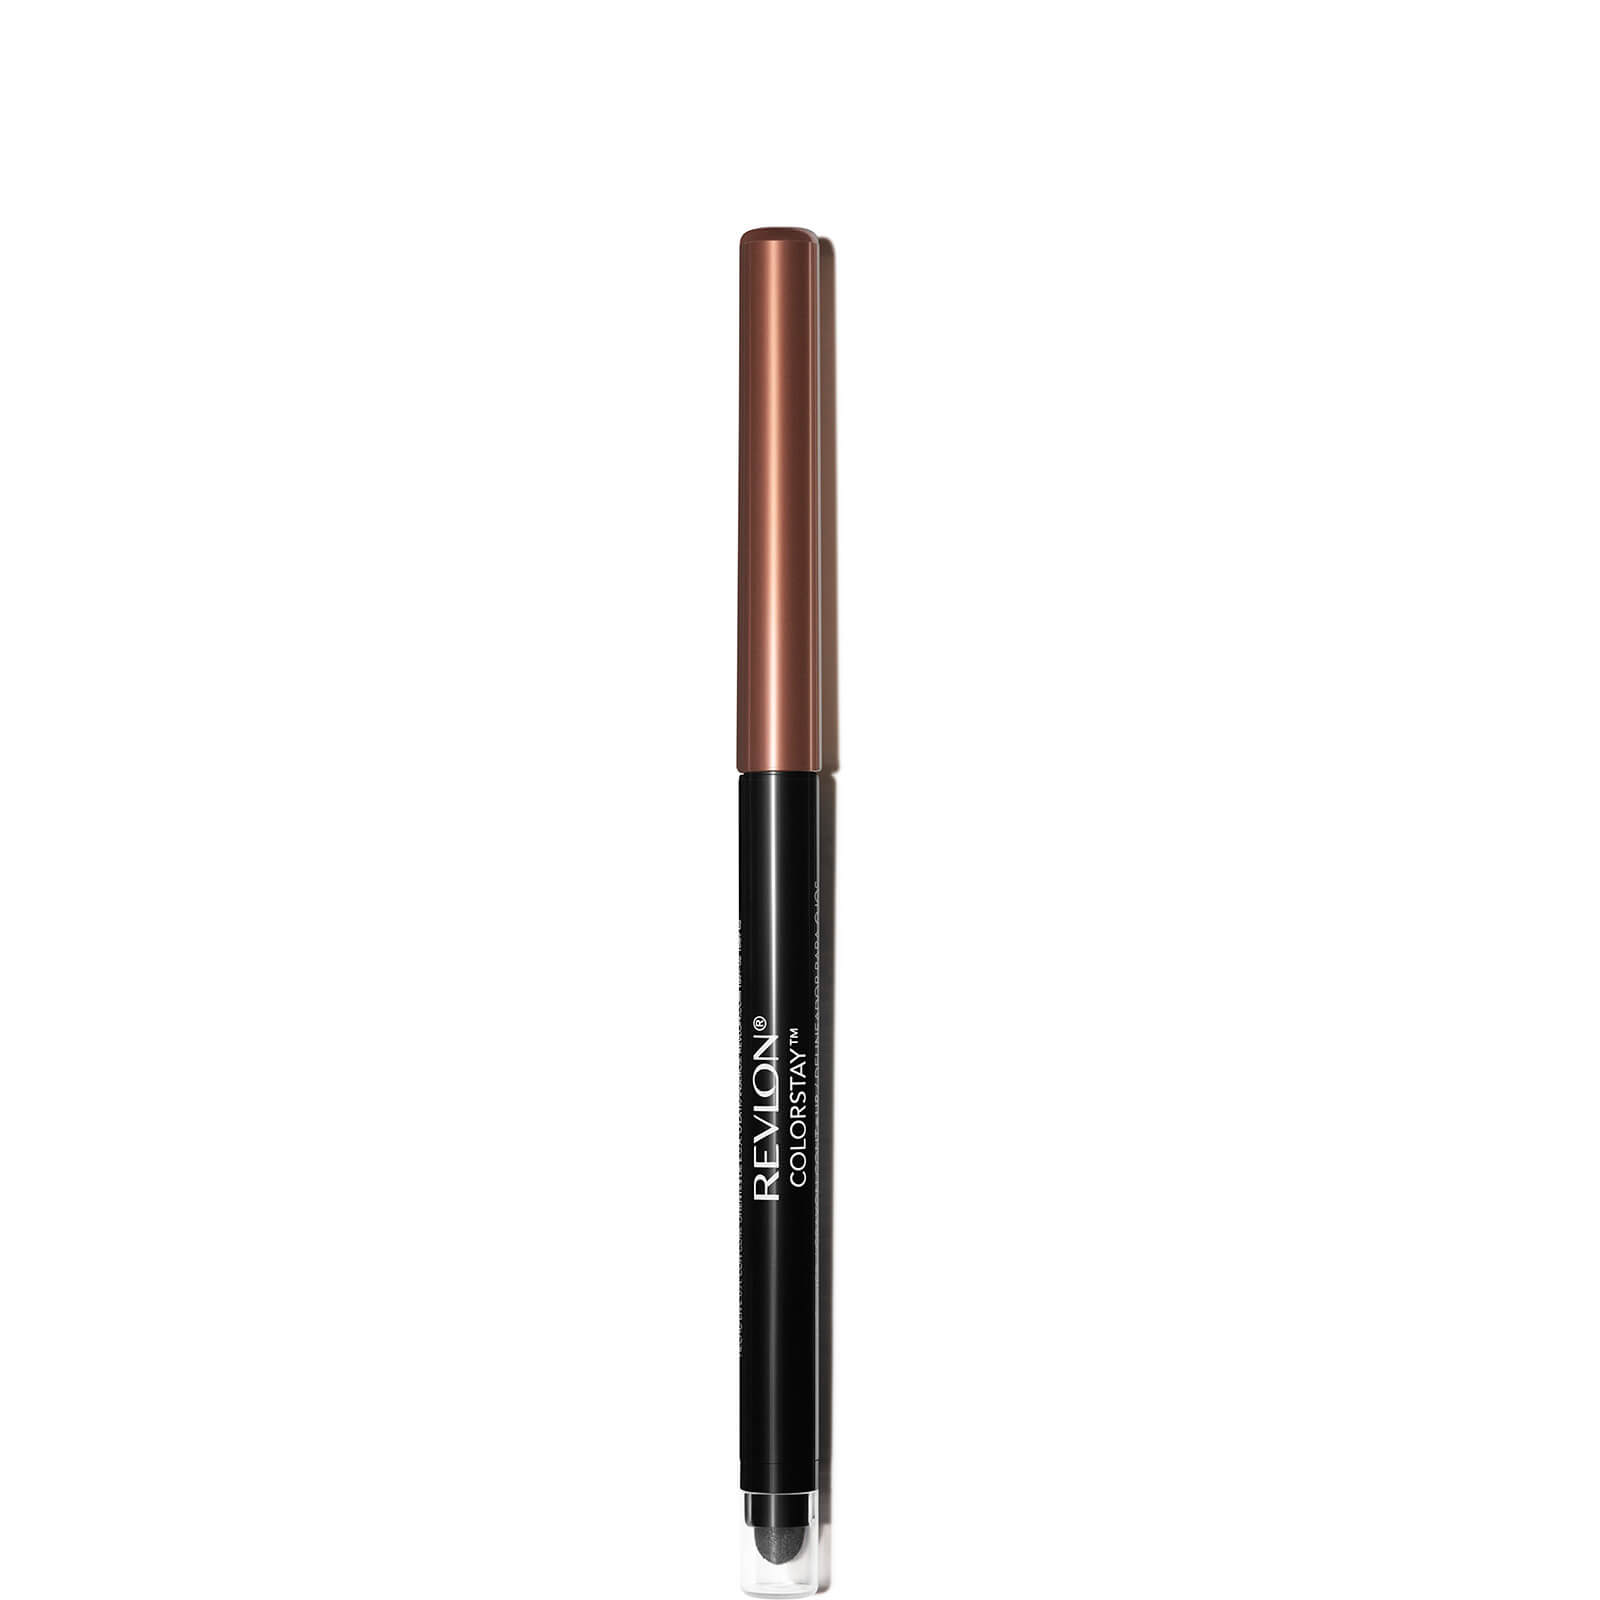 Revlon ColorStay Eyeliner Pencil 1.67g (Various Shades) - Bronze